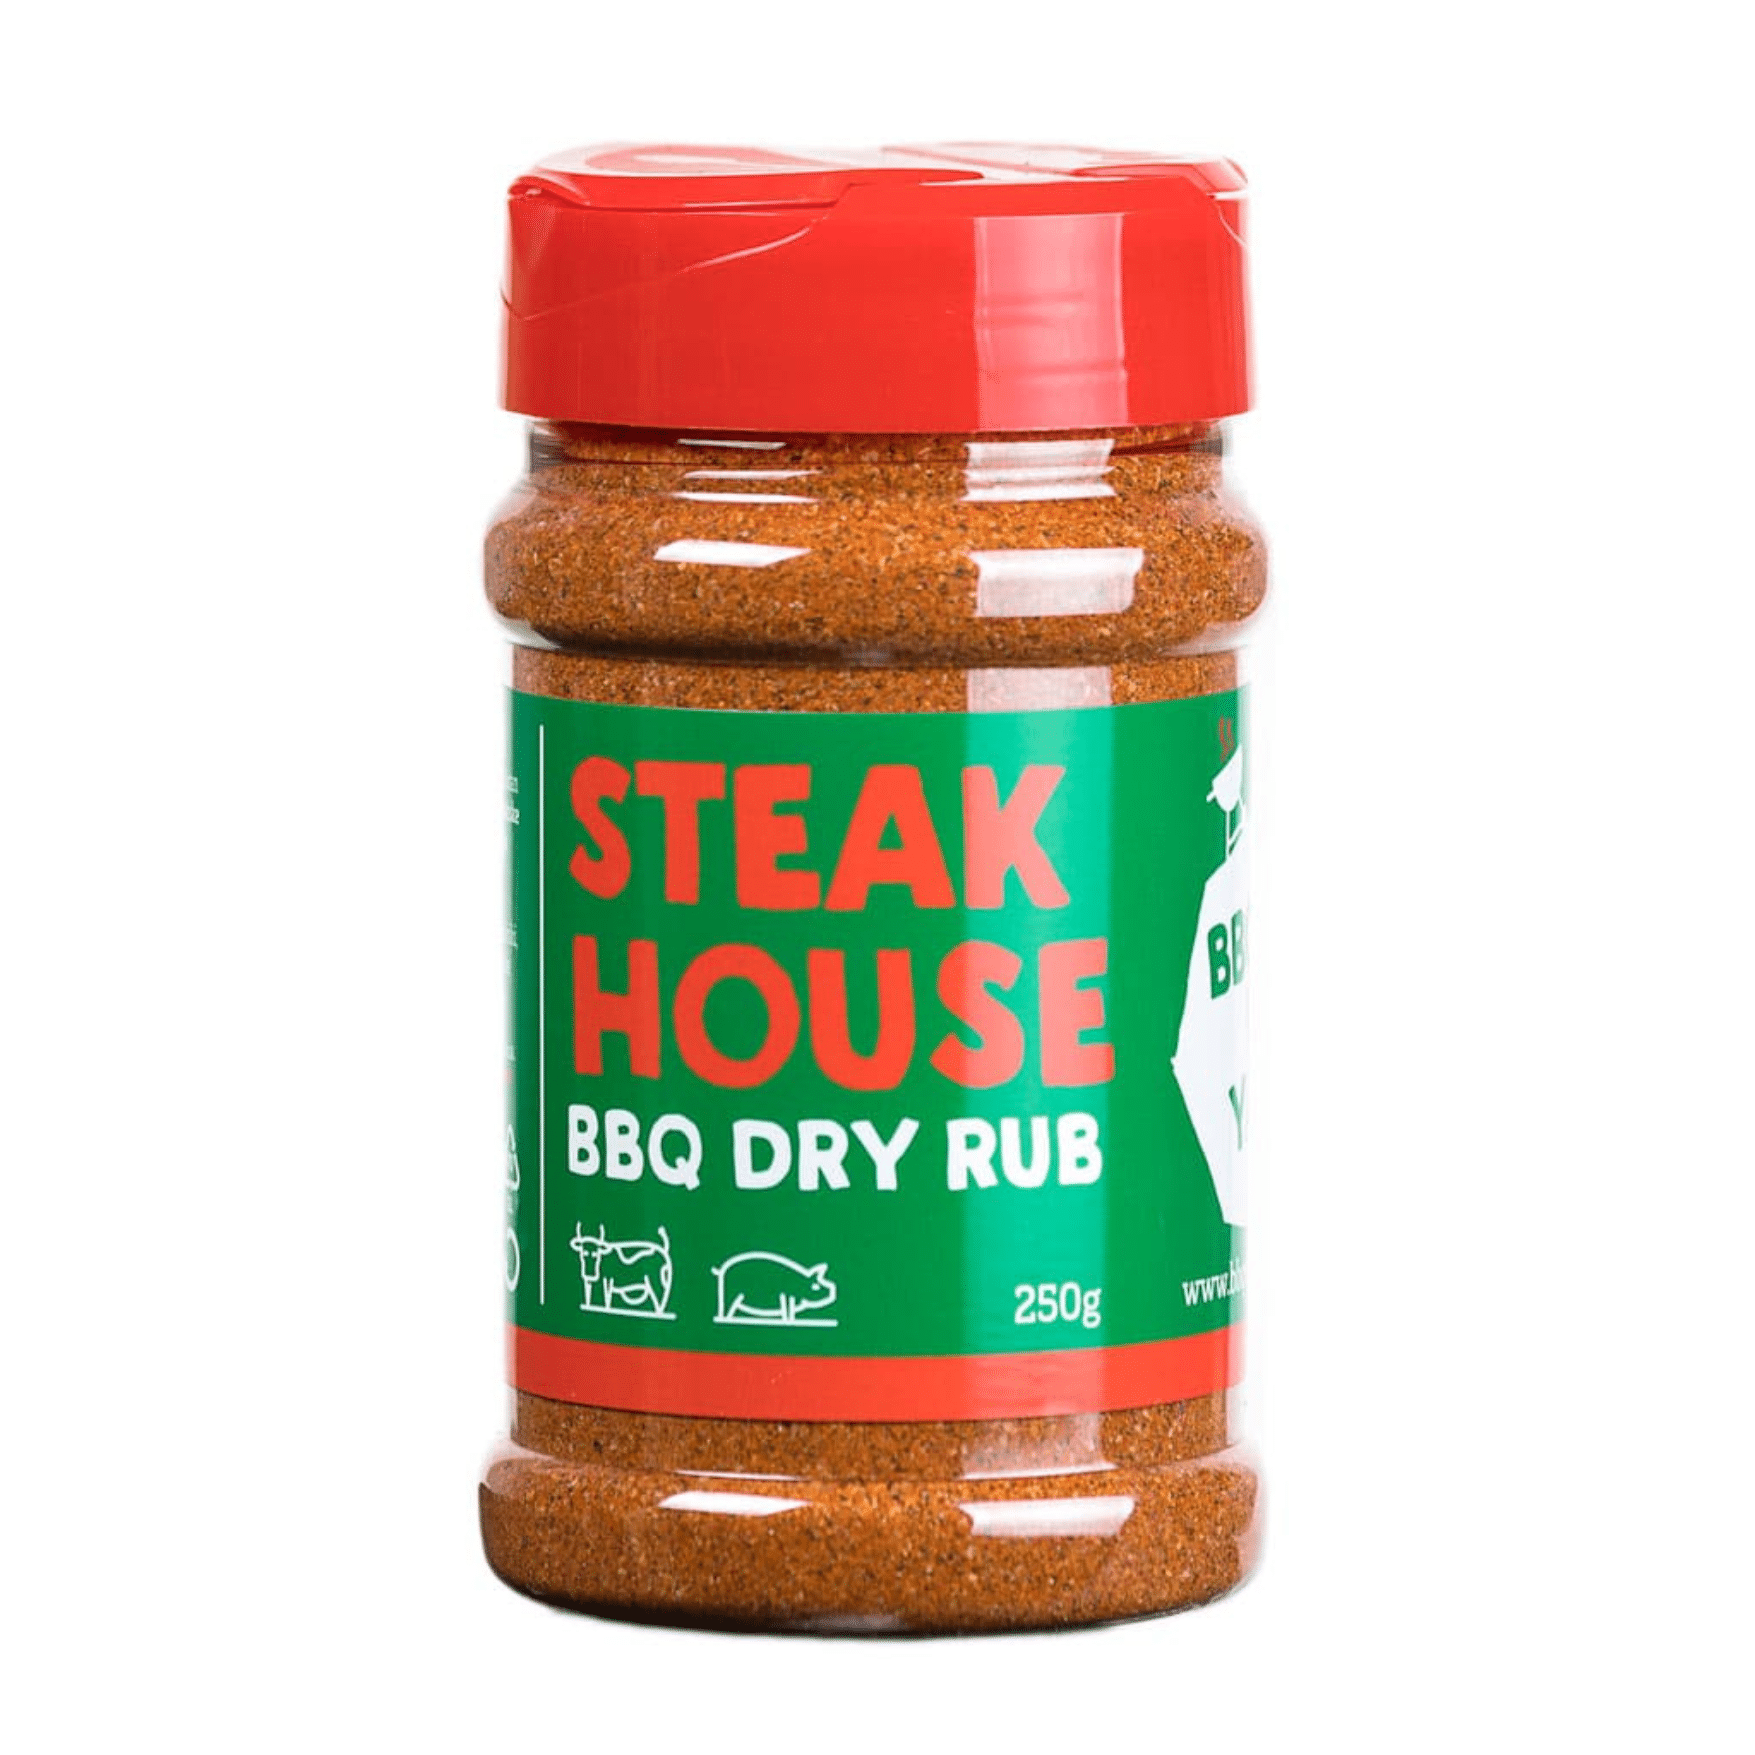 steakhouse dry rub - bbqhotyard.com